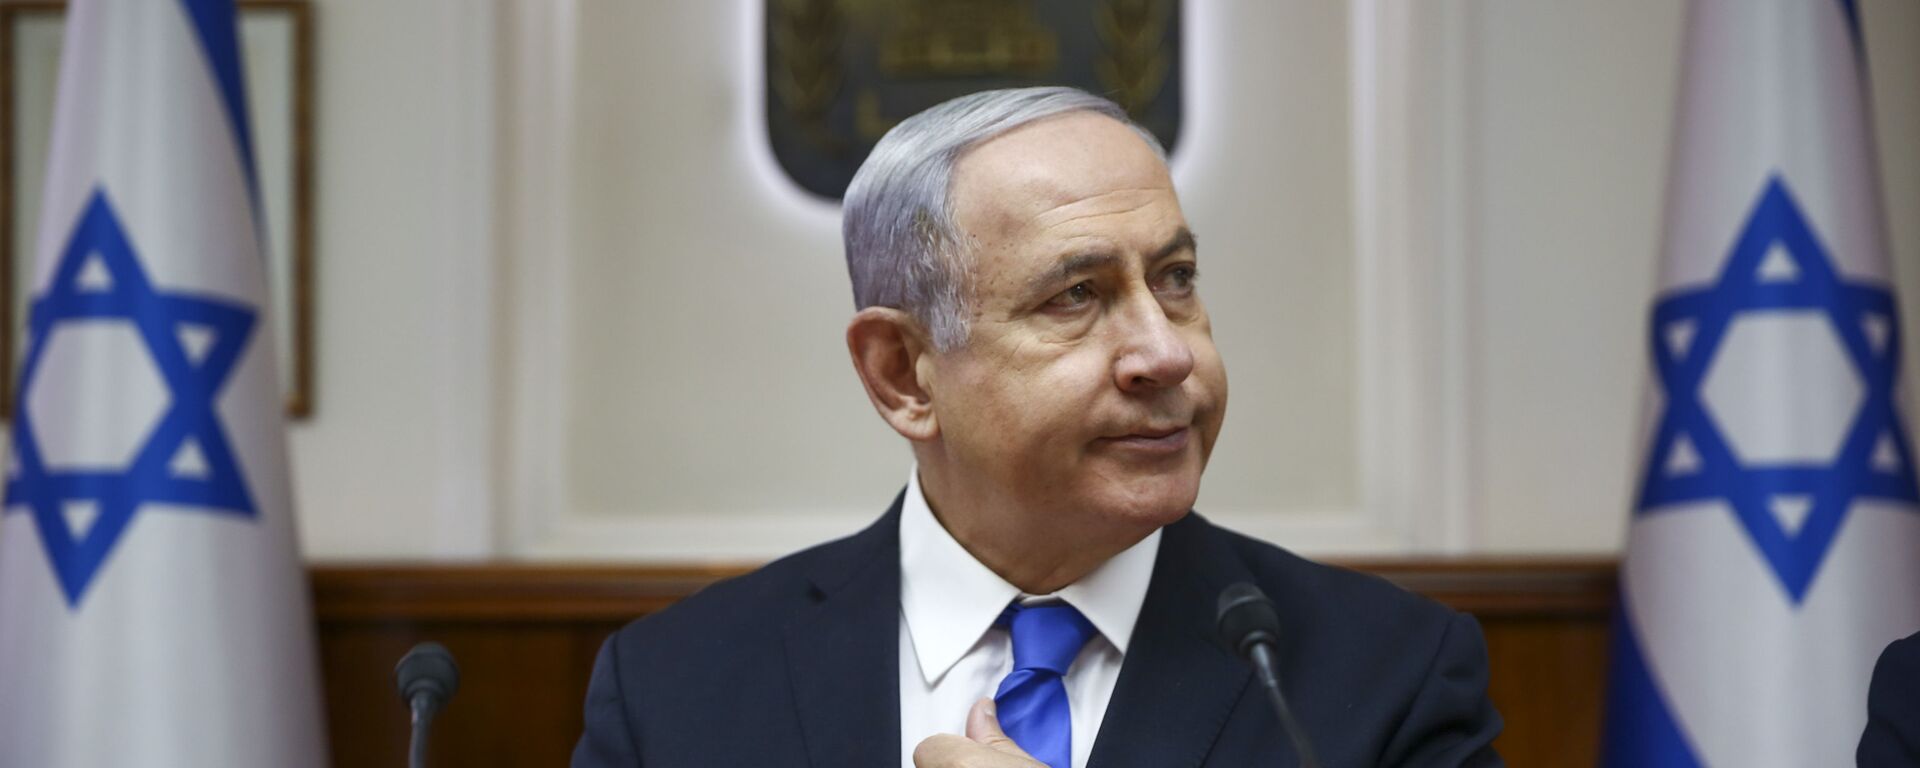 El primer ministro israelí, Benjamín Netanyahu - Sputnik Mundo, 1920, 15.11.2020